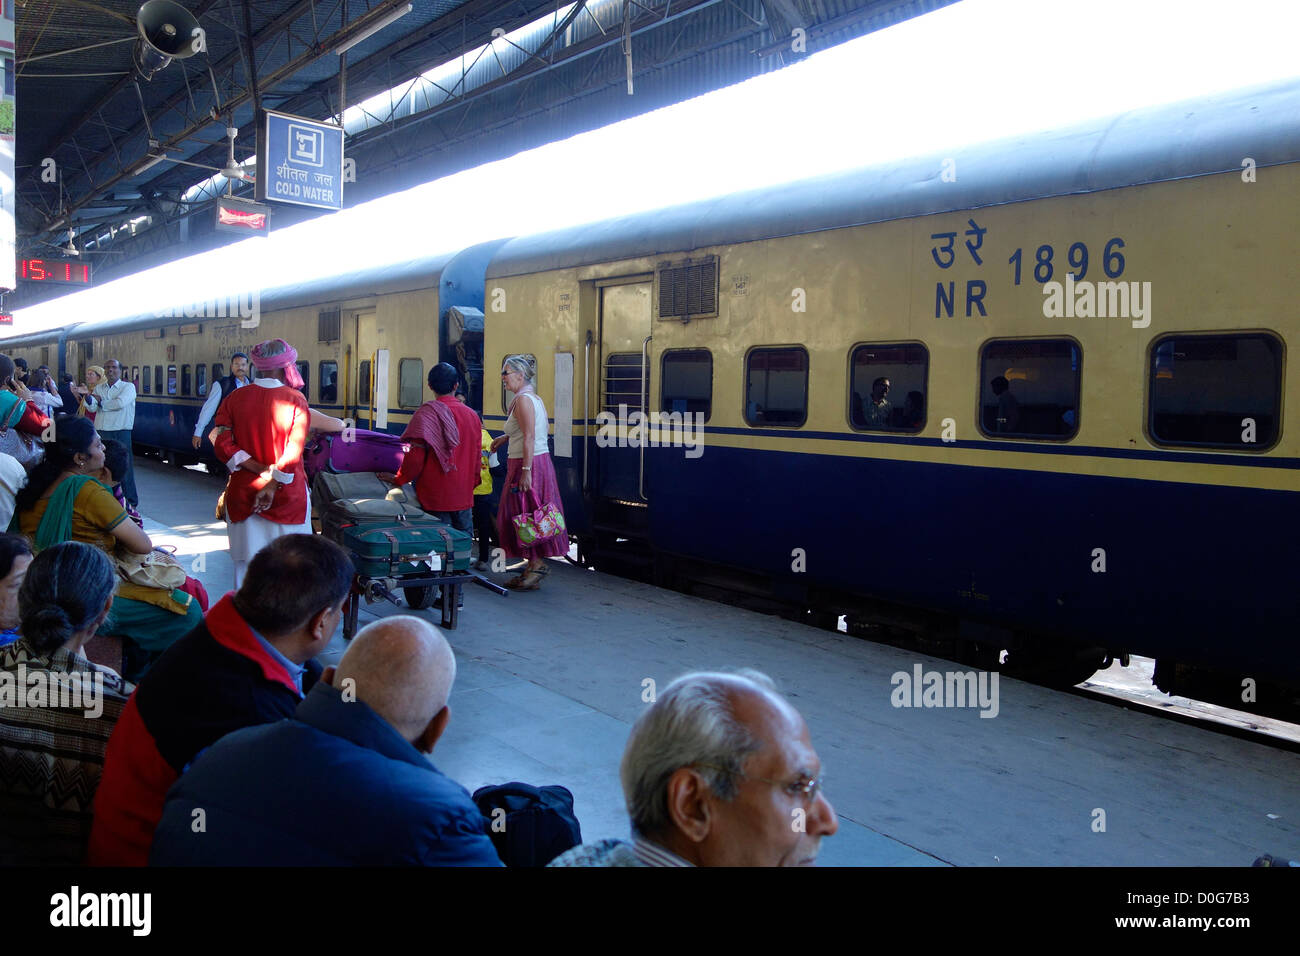 Train,Railway Station,Platform,Passengers,Travelers,People,Indian Railways,Waiting,Train,Railway coaches Stock Photo